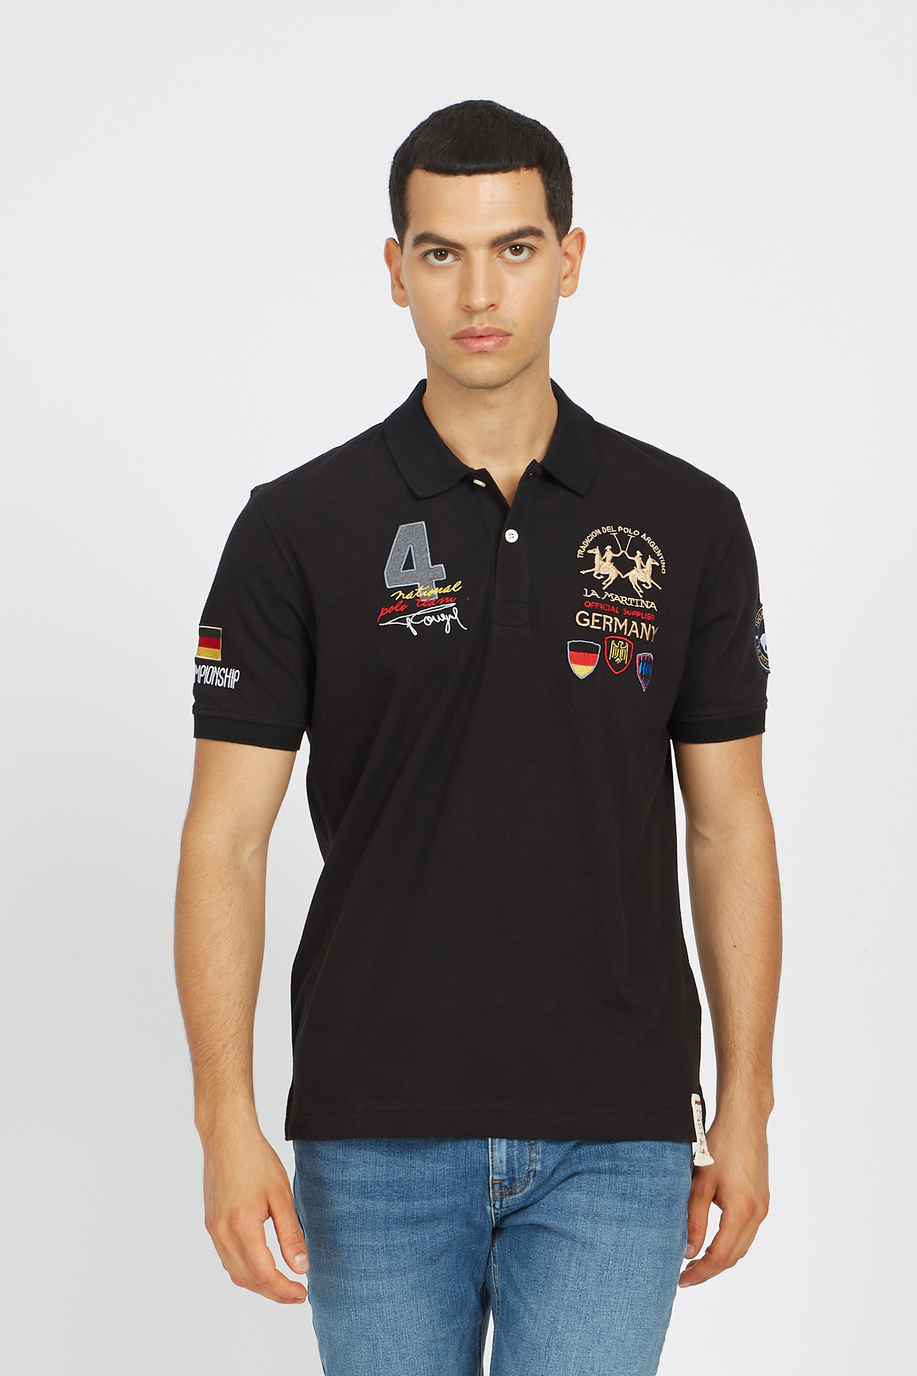 Men's short-sleeved polo shirt in regular fit stretch cotton - Vaughn - Inmortales | La Martina - Official Online Shop